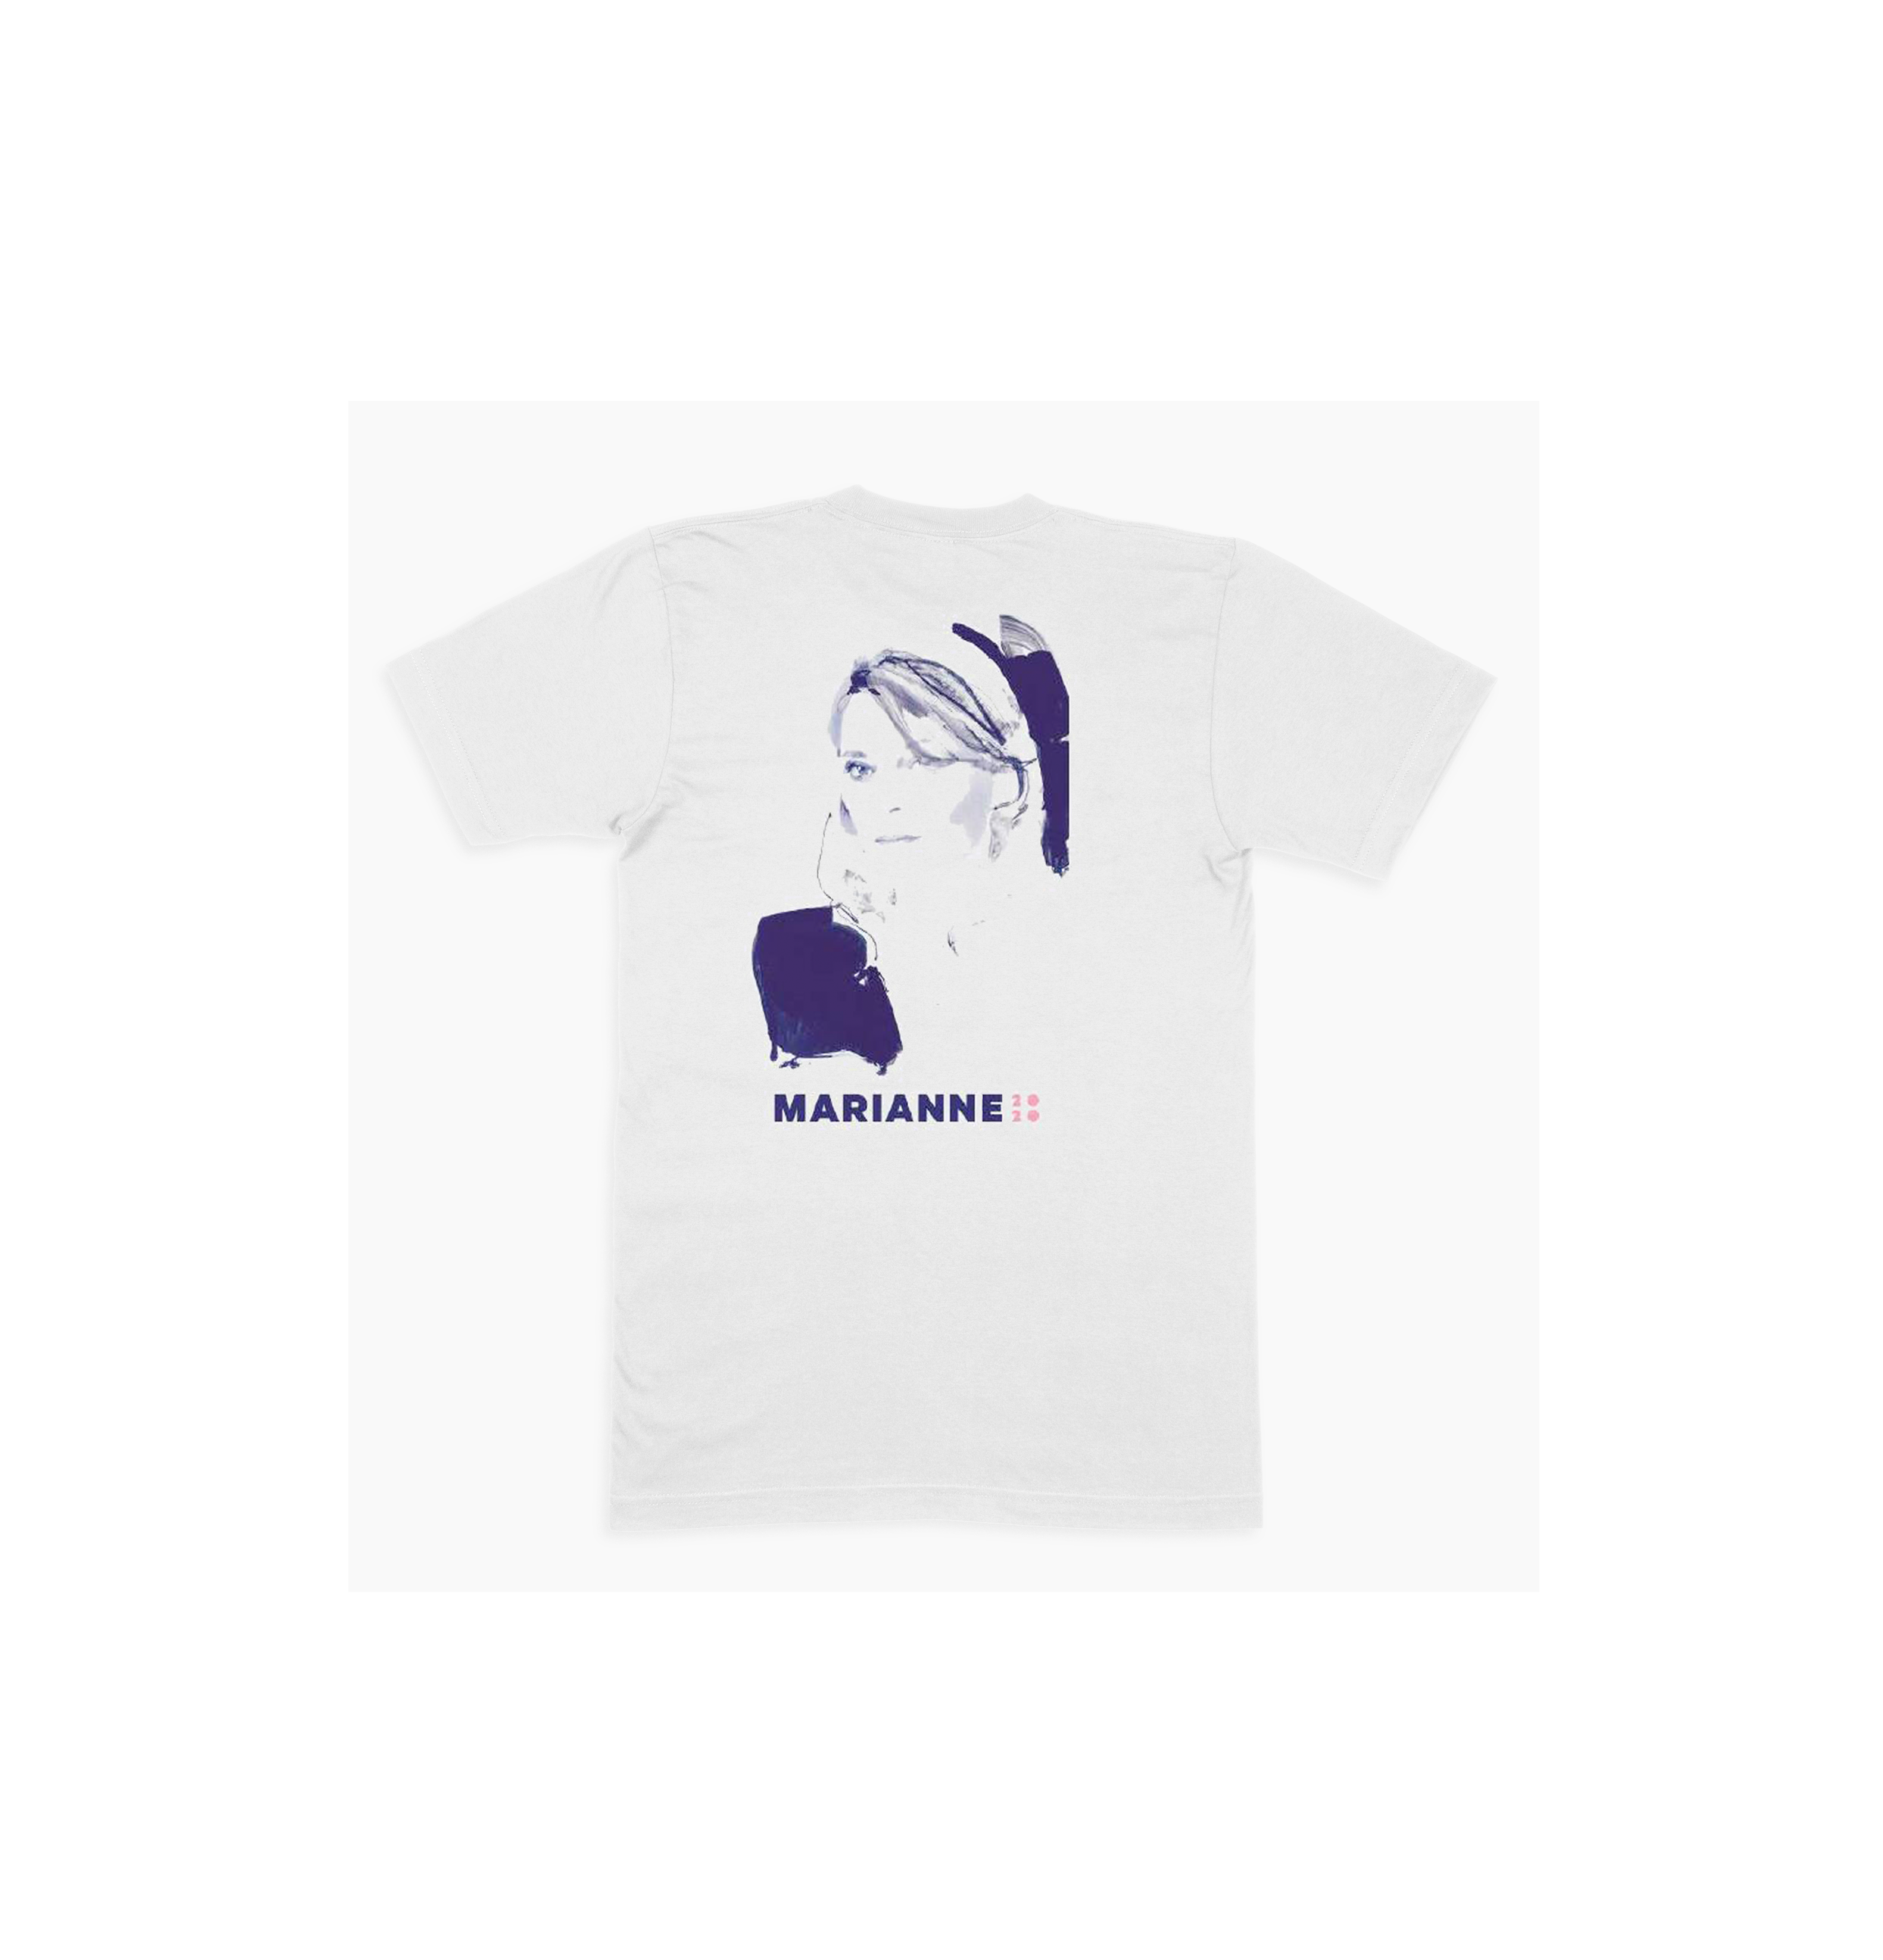 Marianne Williamson T-Shirt by David Downton